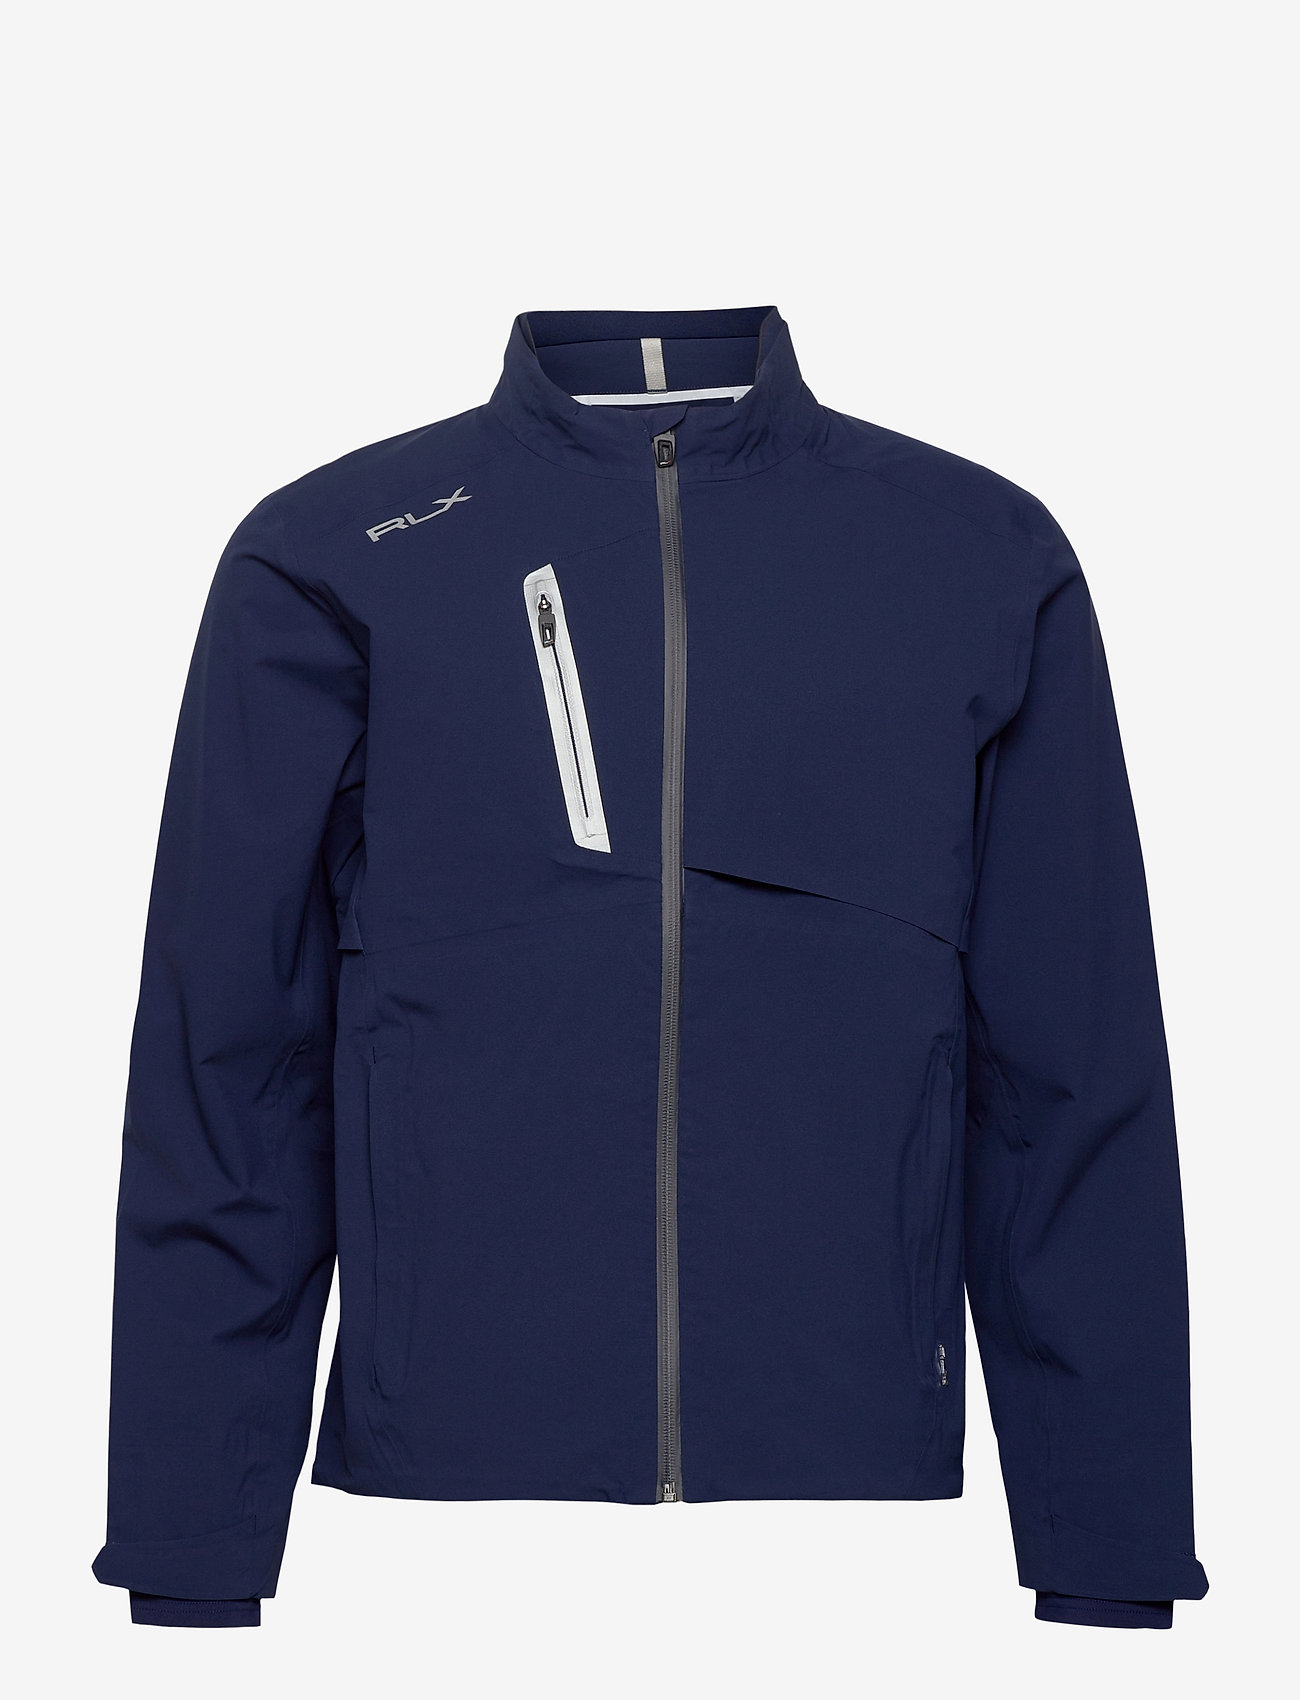 rlx golf jacket